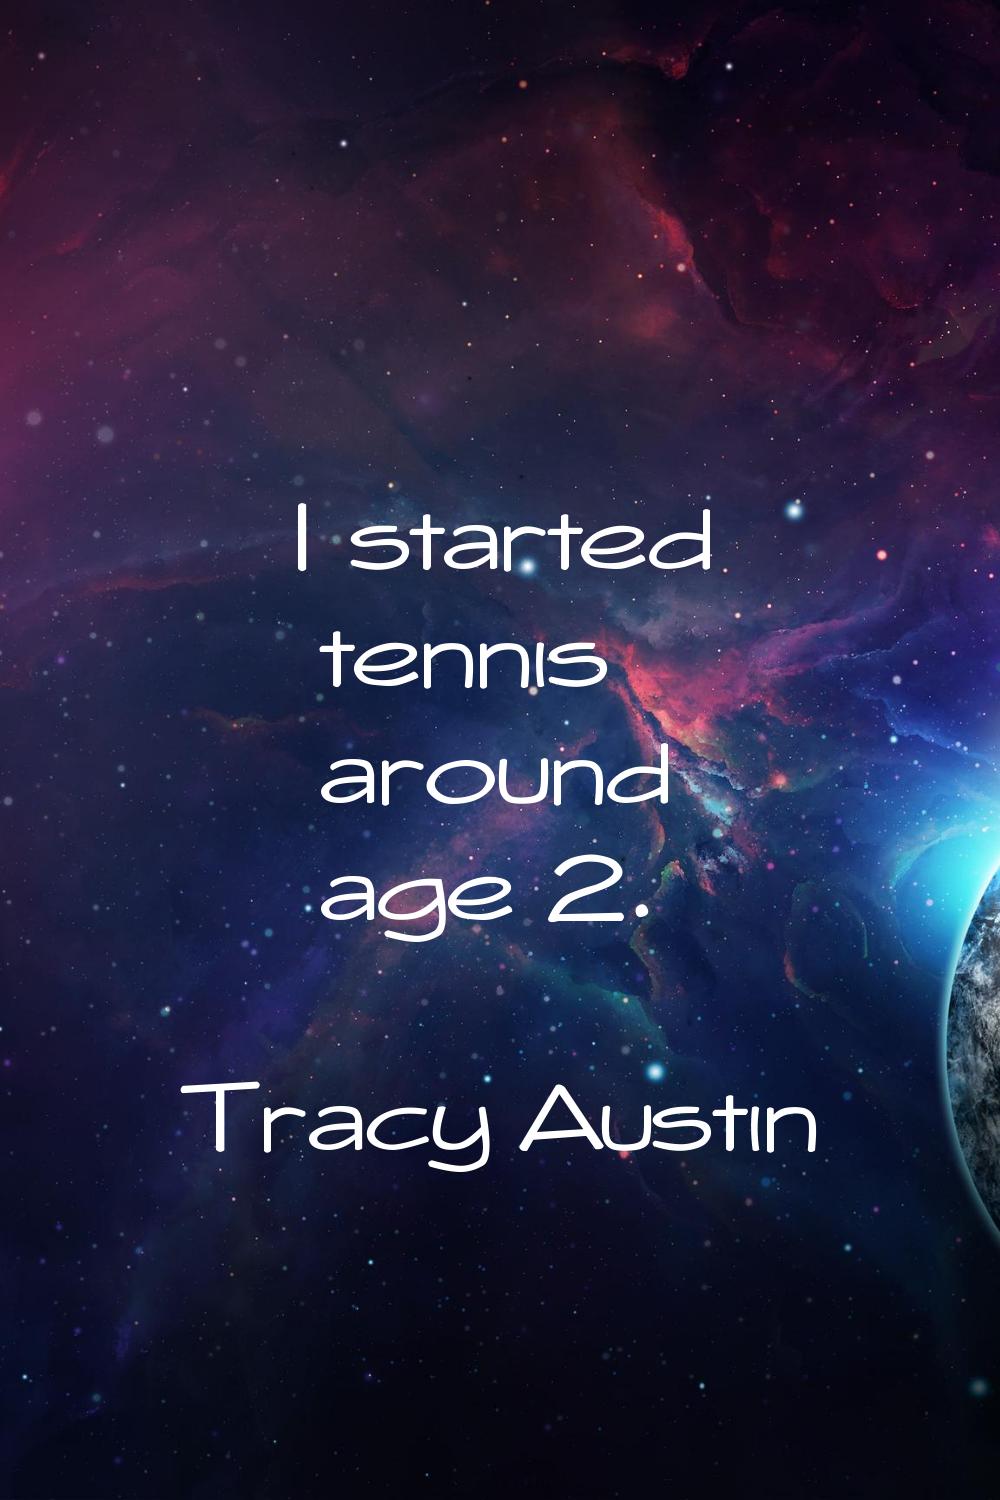 I started tennis around age 2.